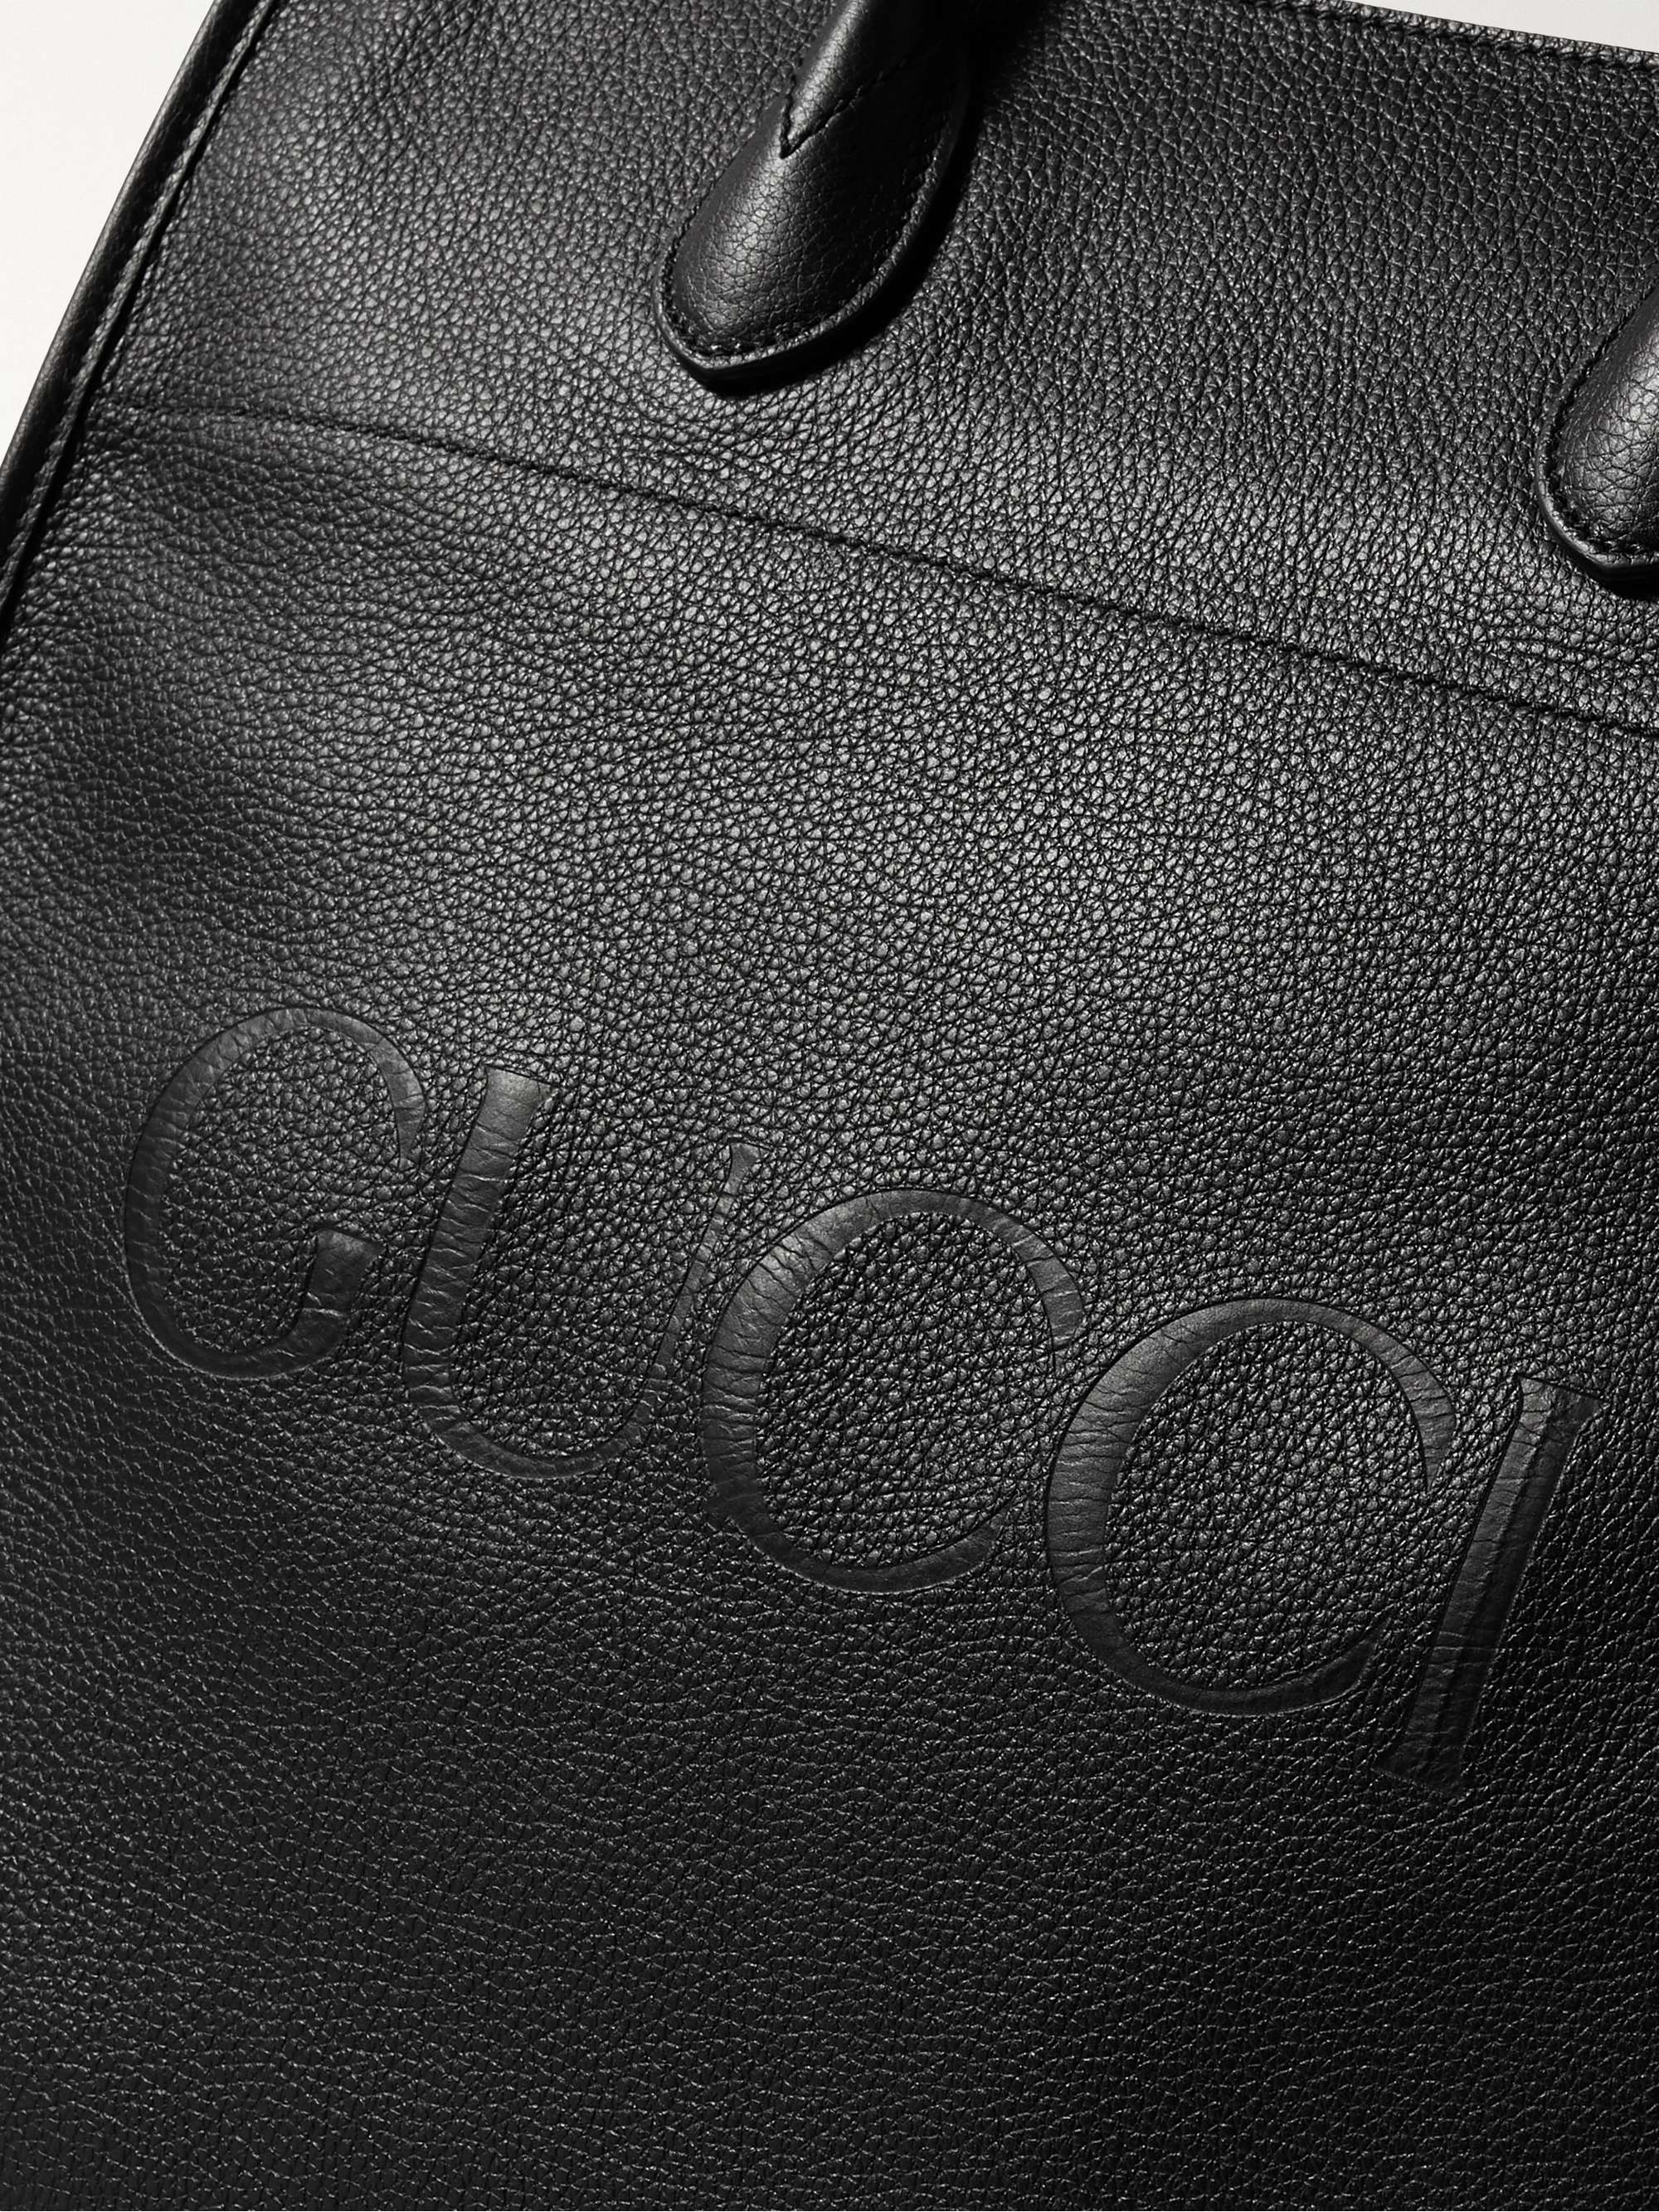 GUCCI Logo-Embossed Full-Grain Leather Tote Bag